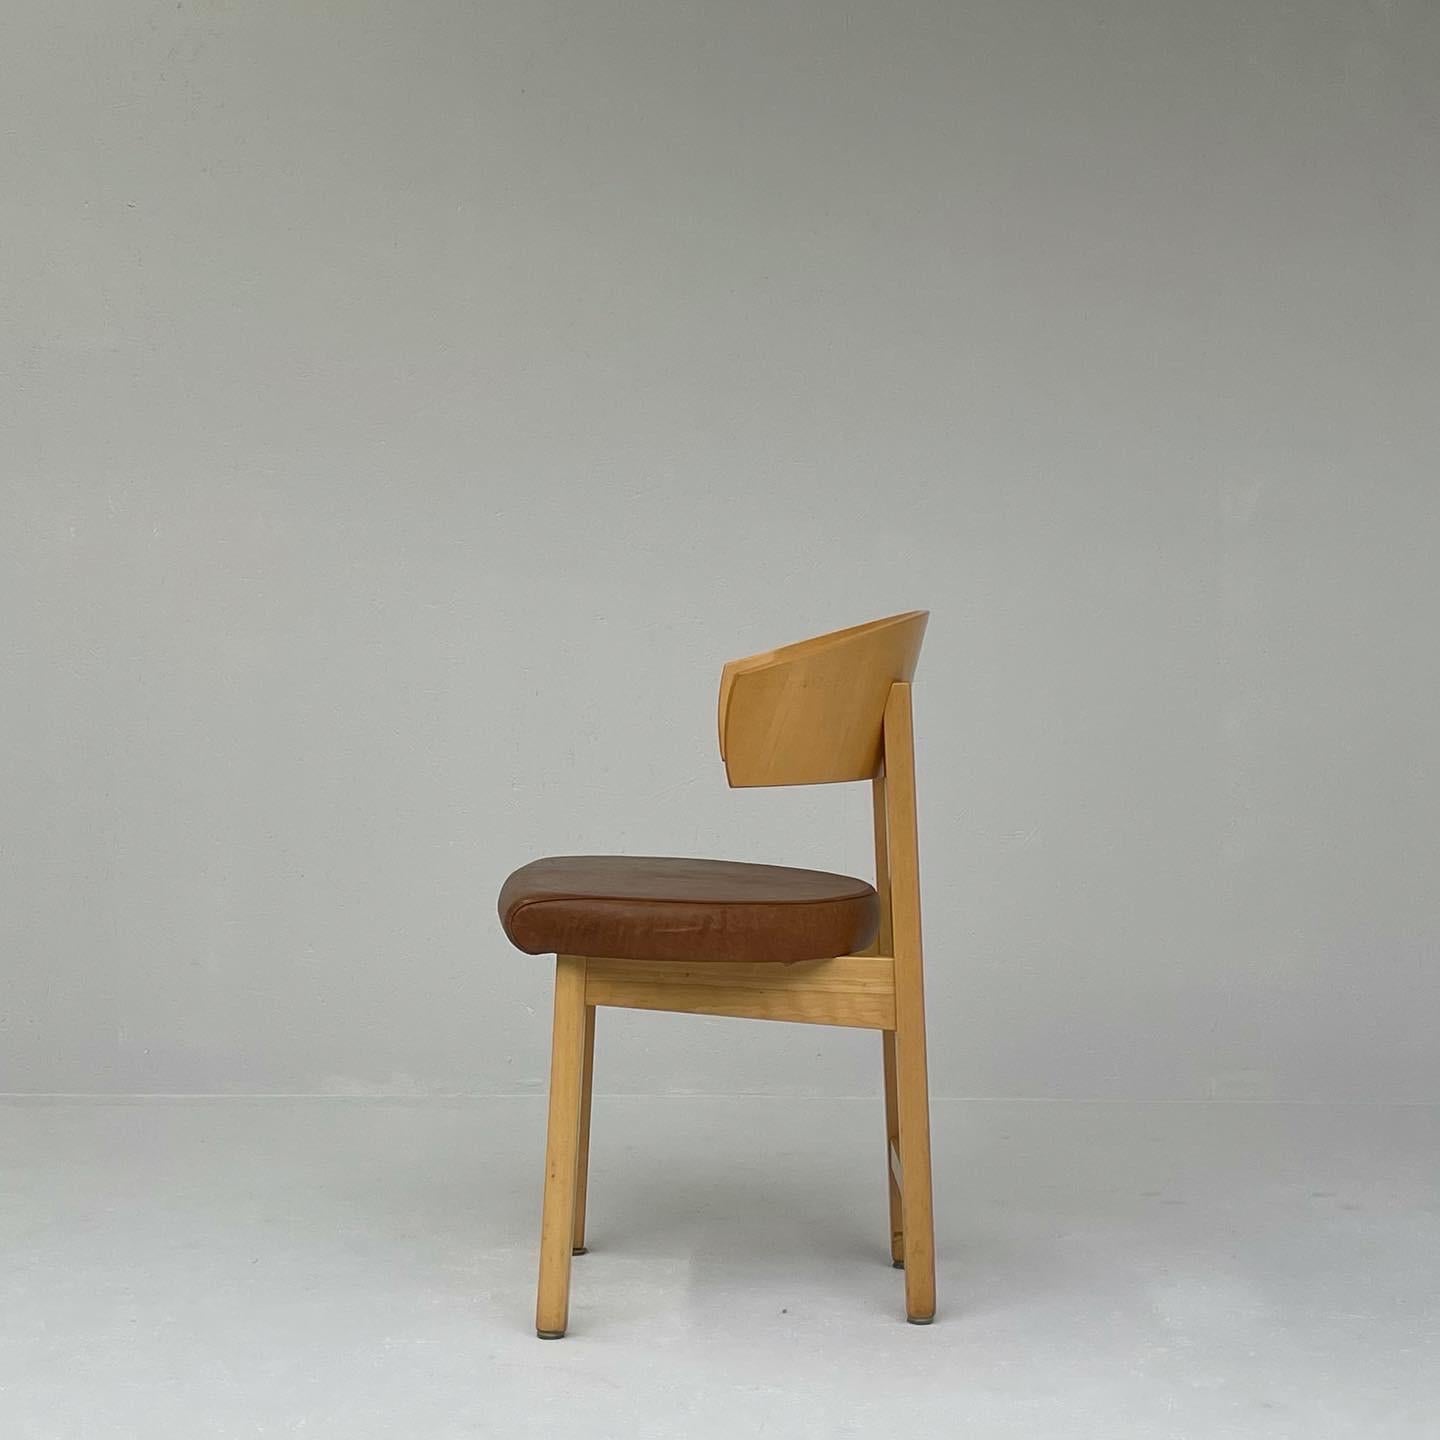 Set of 6 Niels Gammelgaard chairs for Ikea. 

Dimensions: 50 x 50 x 80

